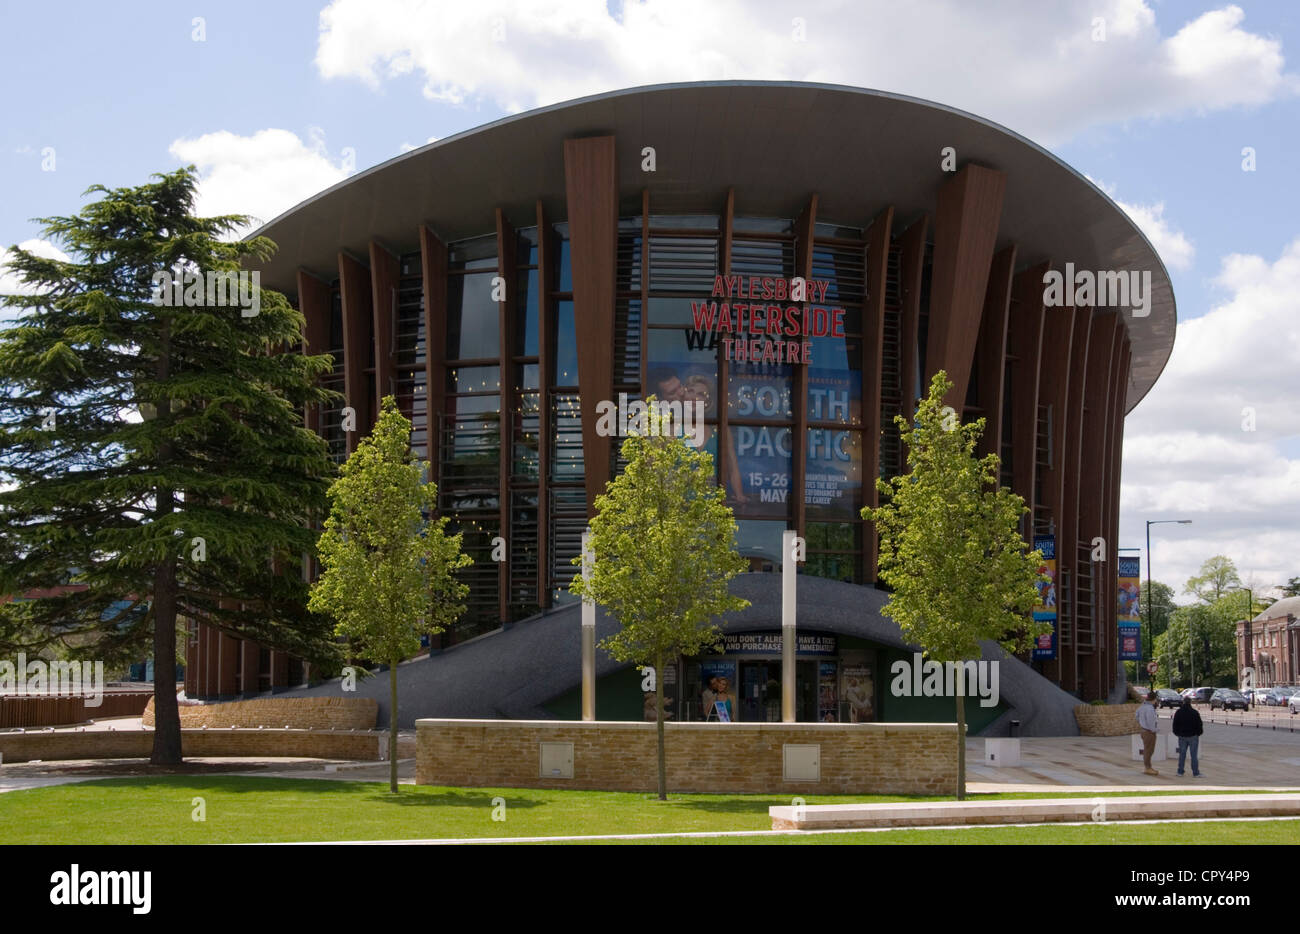 Bucks - Aylesbury - the Waterside theatre - main facade and entrance - tres - gardens -sunlight - blue sky Stock Photo